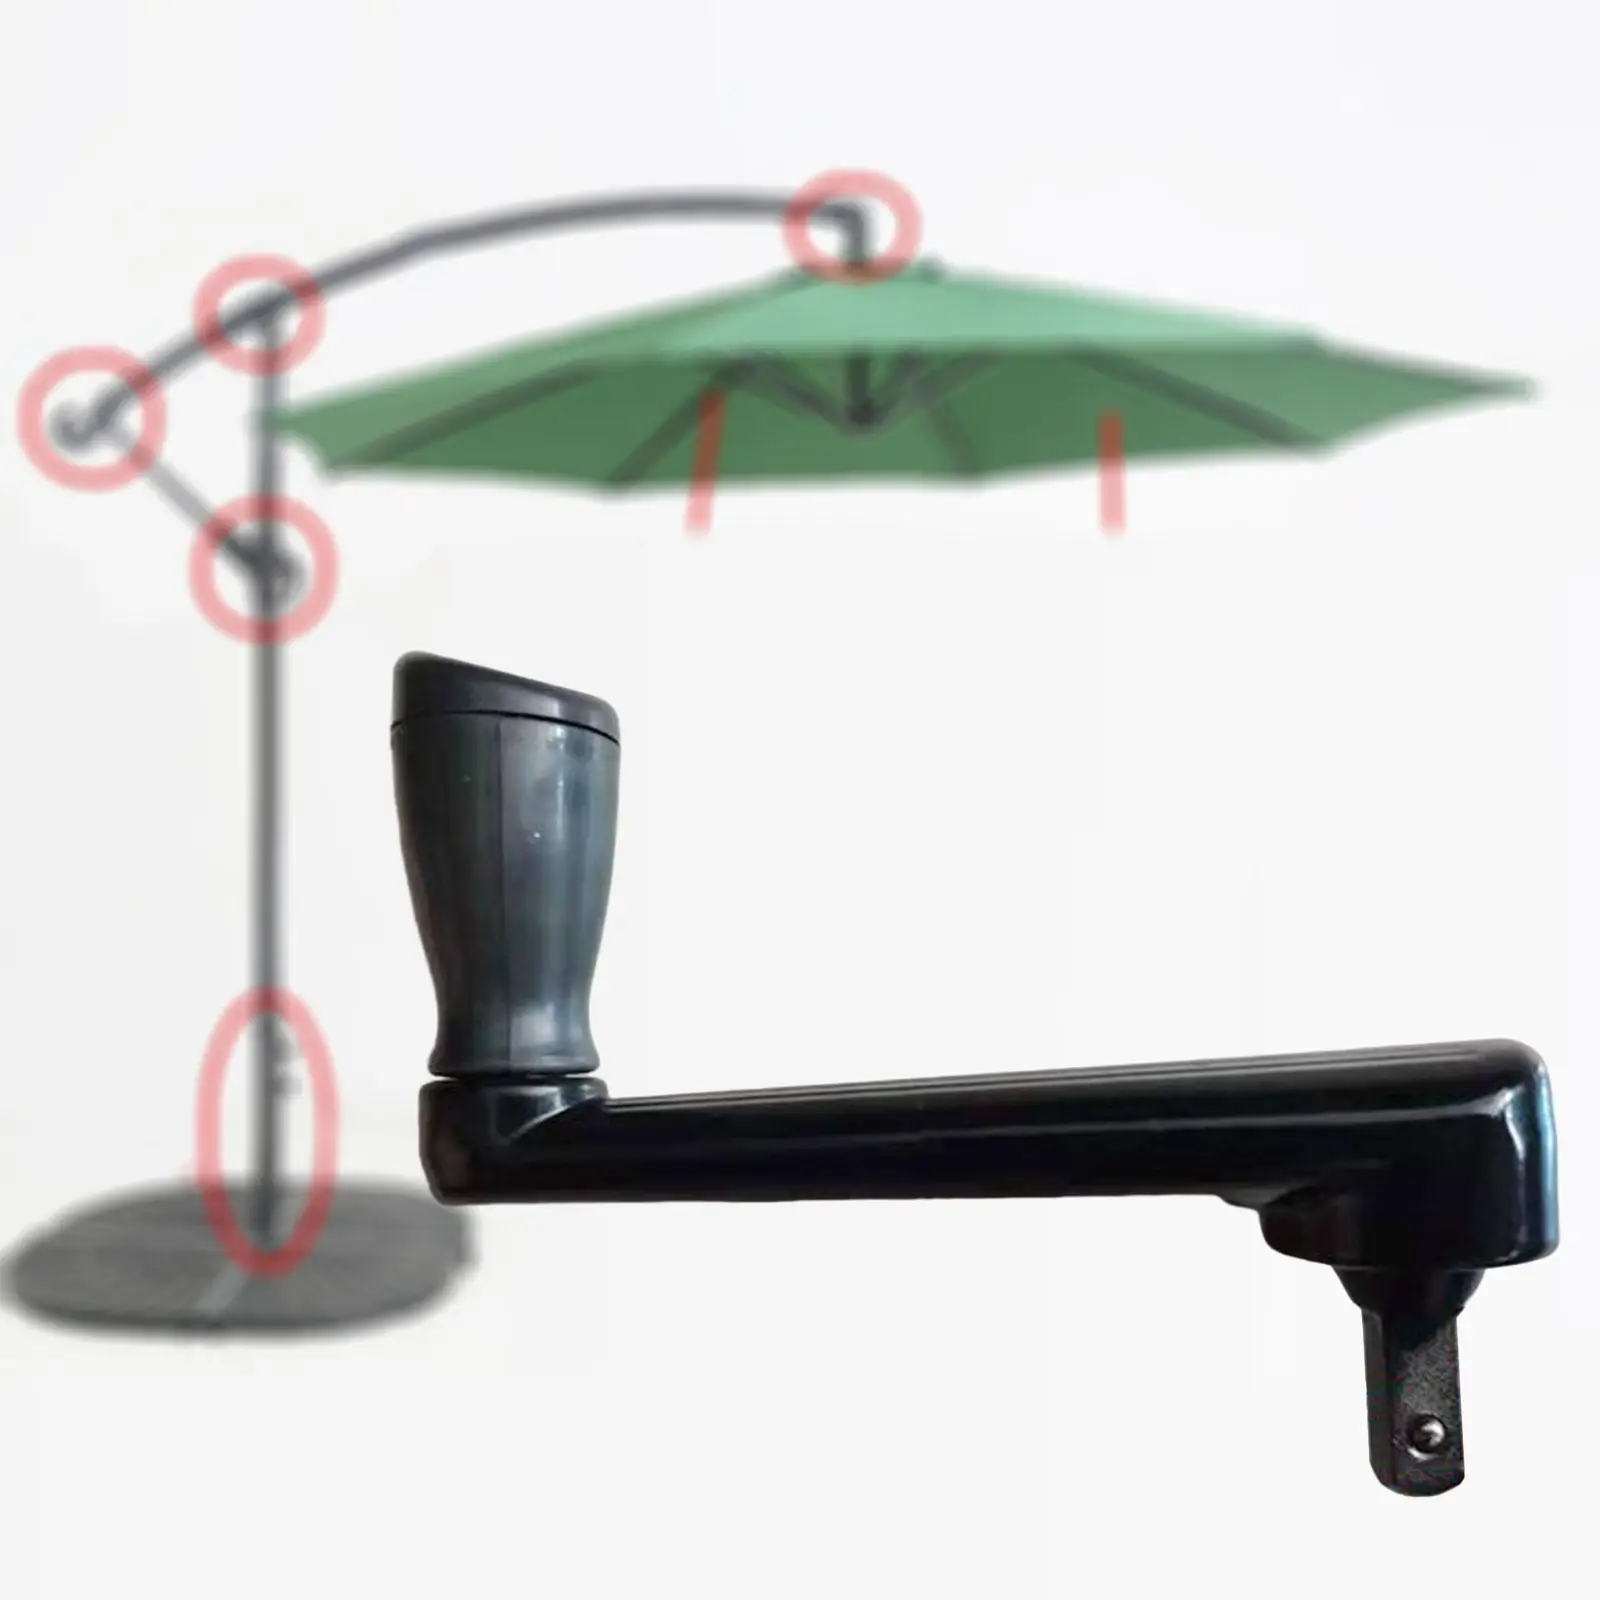 Outdoor Umbrella Rocker Handle Heavy Duty Parasol Adjustable Replace Umbrella Attachment for Courtyard Garden Balcony Yard